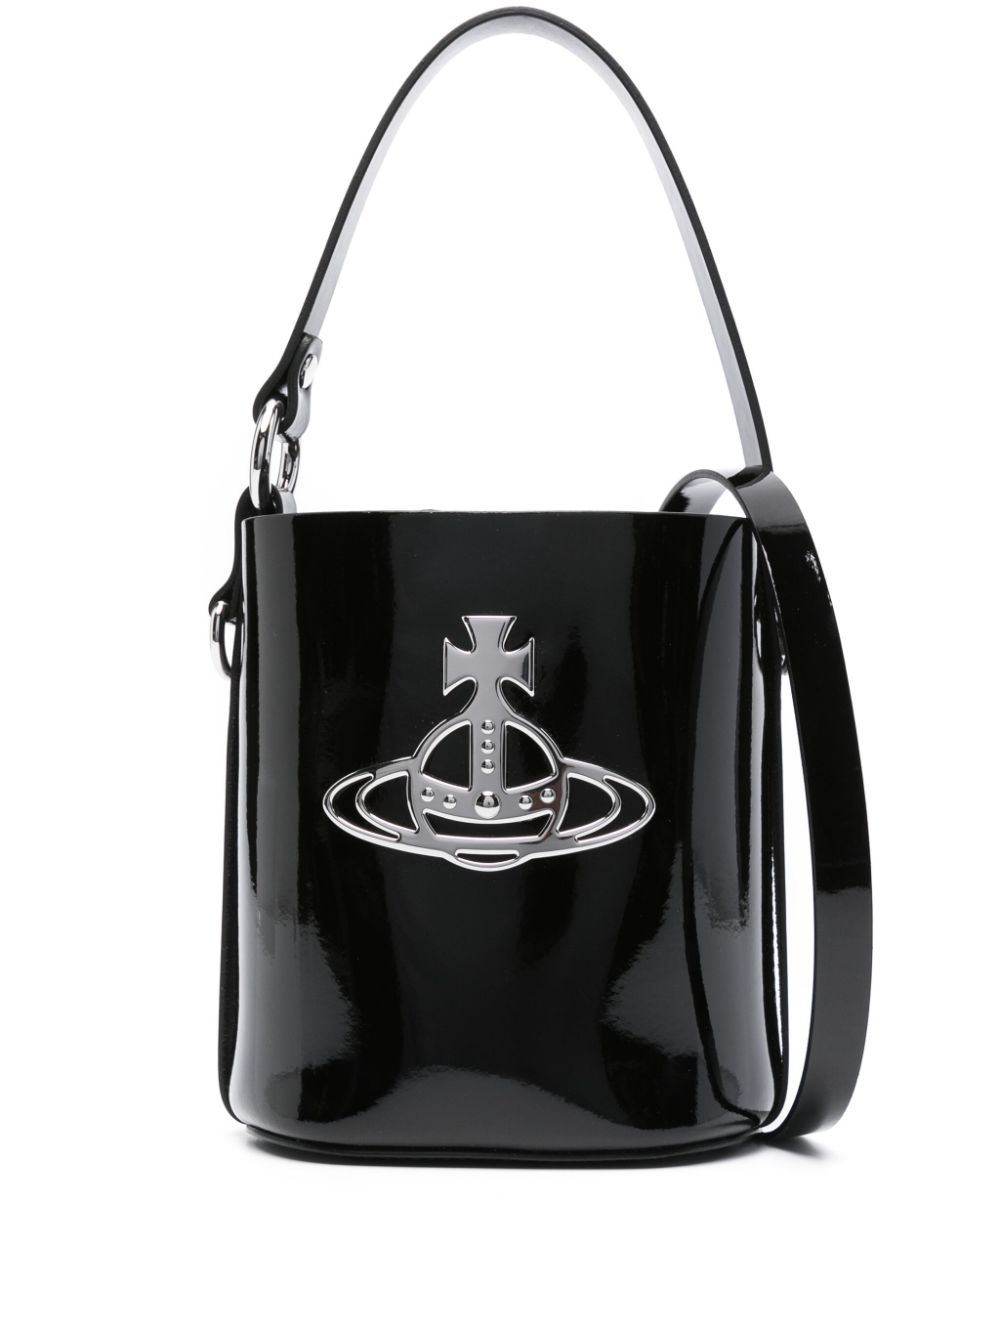 Vivienne Westwood VIVIENNE WESTWOOD- Daisy Patent Leather Bucket Bag